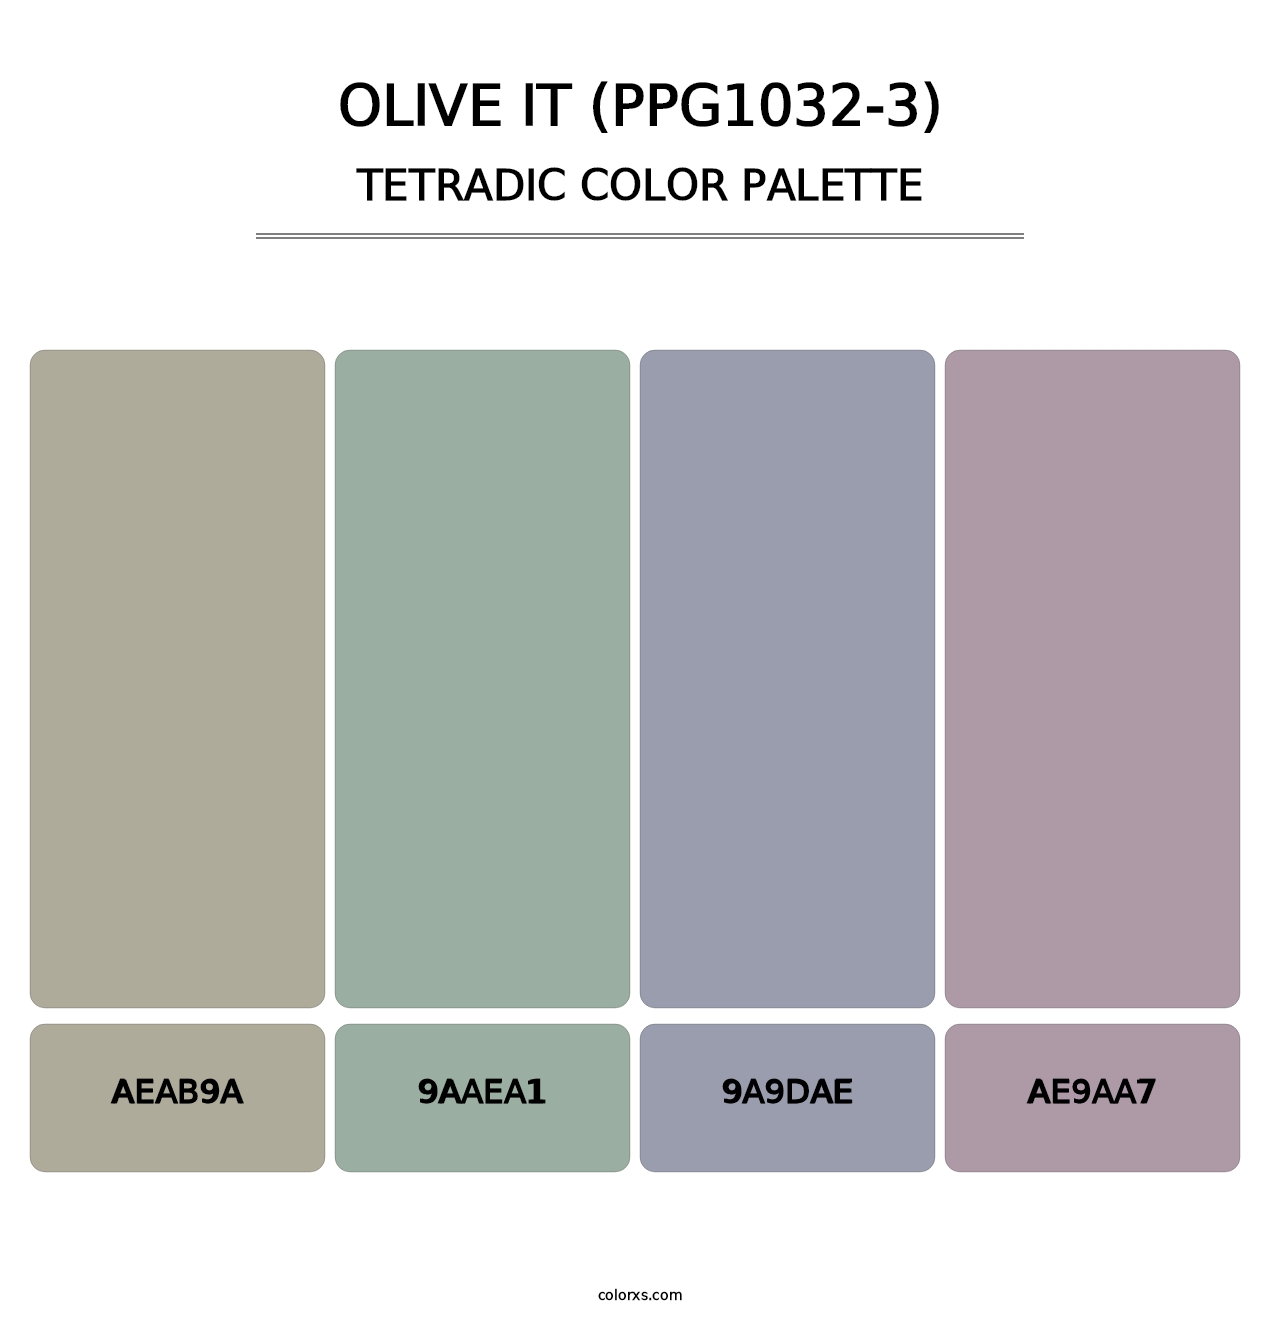 Olive It (PPG1032-3) - Tetradic Color Palette